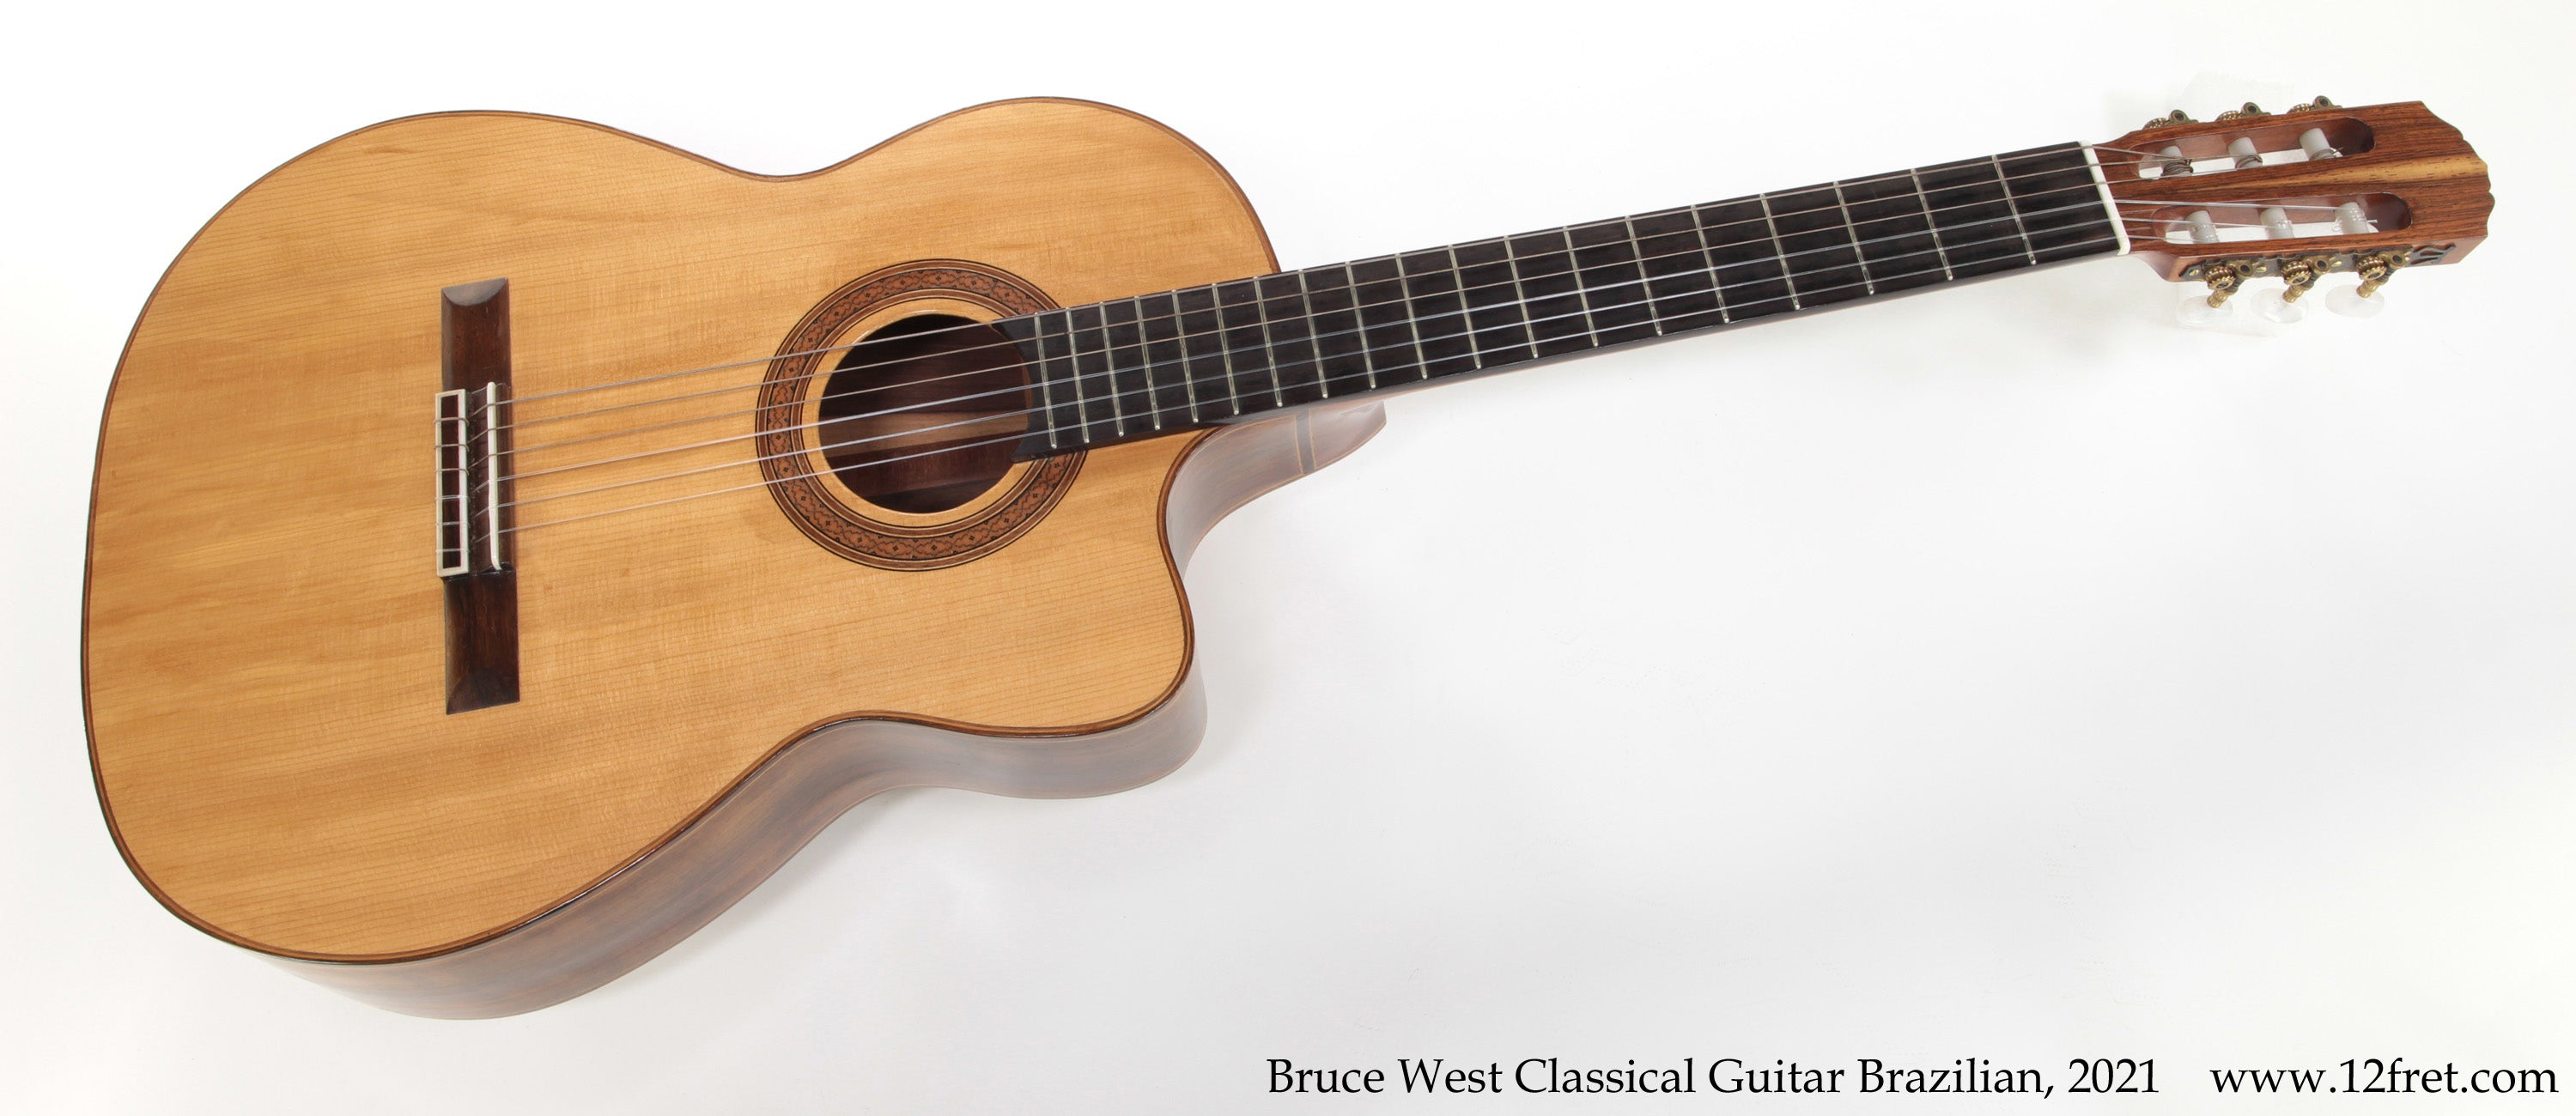 Bruce West Cutaway Classical Guitar Brazilian, 2016 - The Twelfth Fret